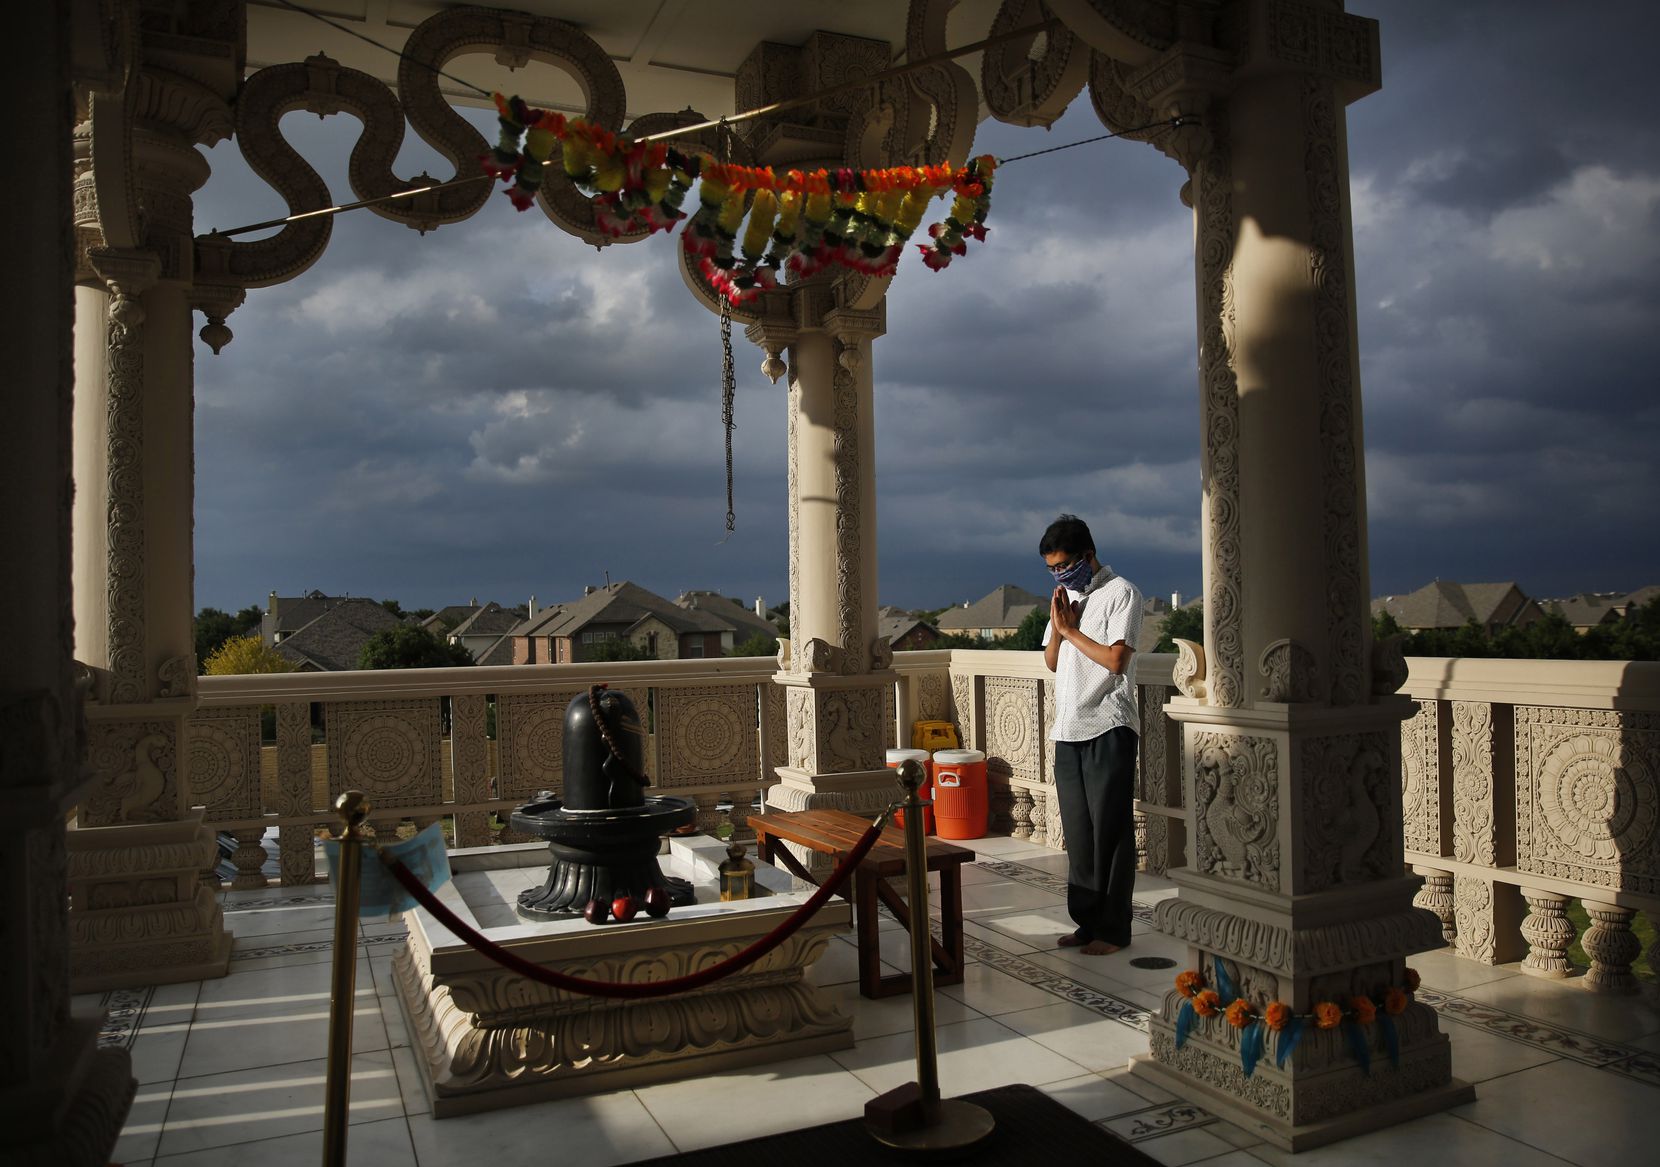 Volunteer Madhan Thirukonda prayed before a large shiva at Radha Krishna Temple of Dallas in...